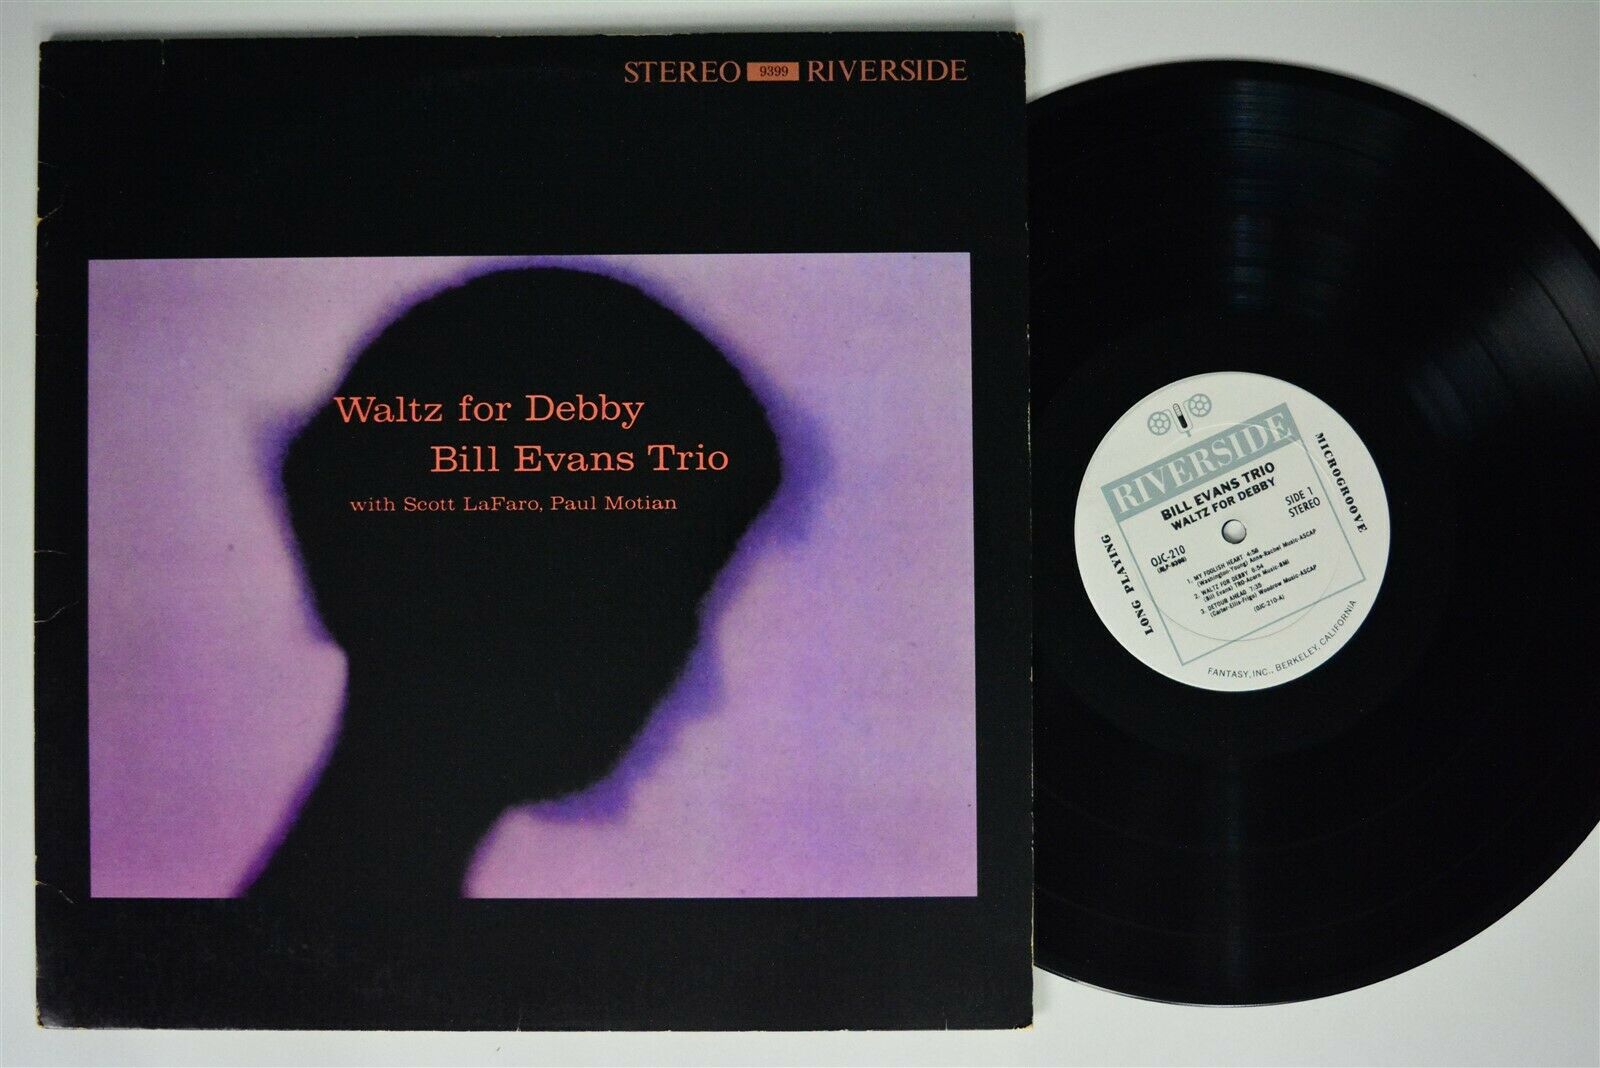 popsike.com - BILL EVANS TRIO Waltz For Debby RIVERSIDE OJC-210 LP